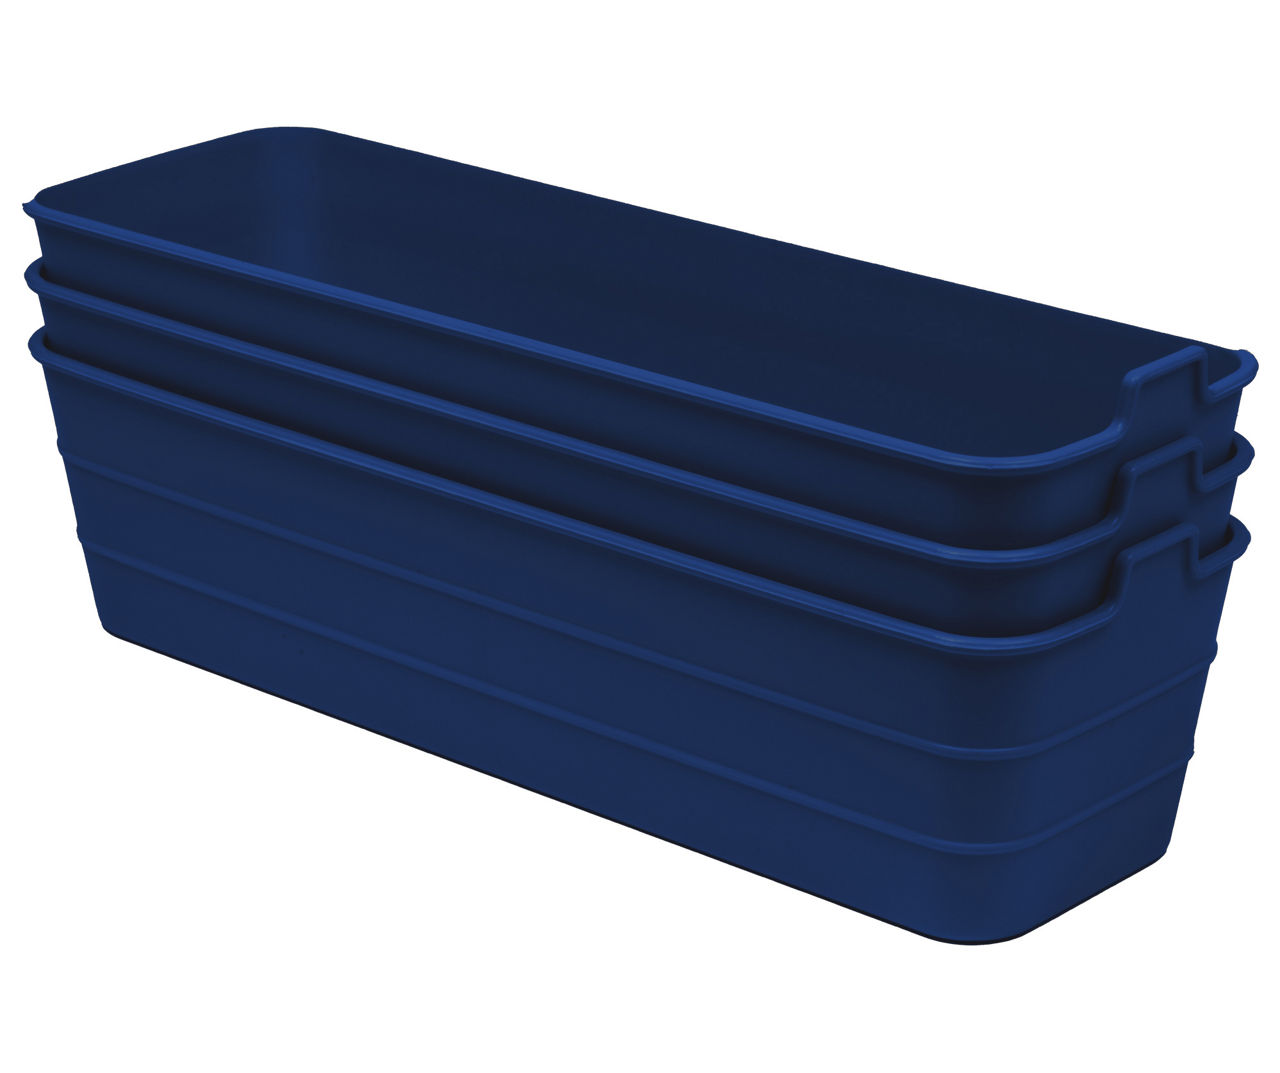 Marine Blue Narrow Flex Tray, 3-Pack